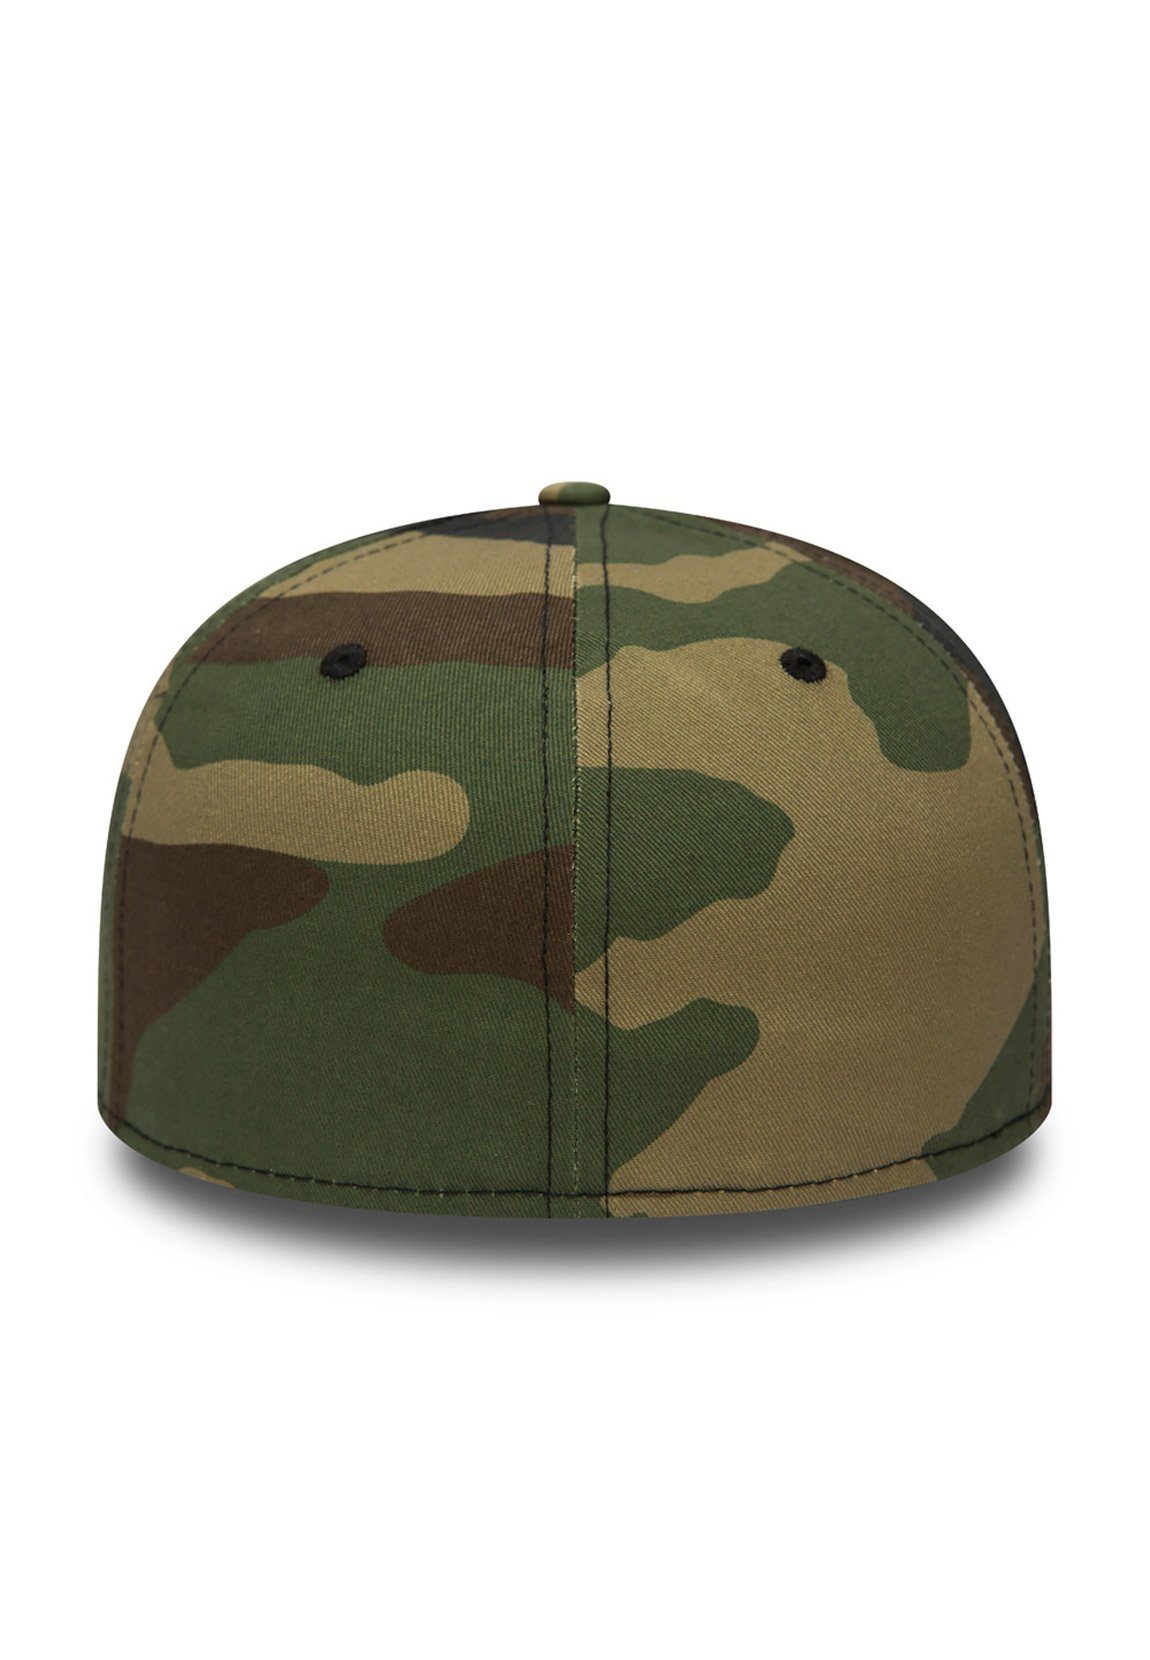 New BASIC NE Baseball New Camouflage Cap WOODCAM Newera 59Fifty Cap Era Era